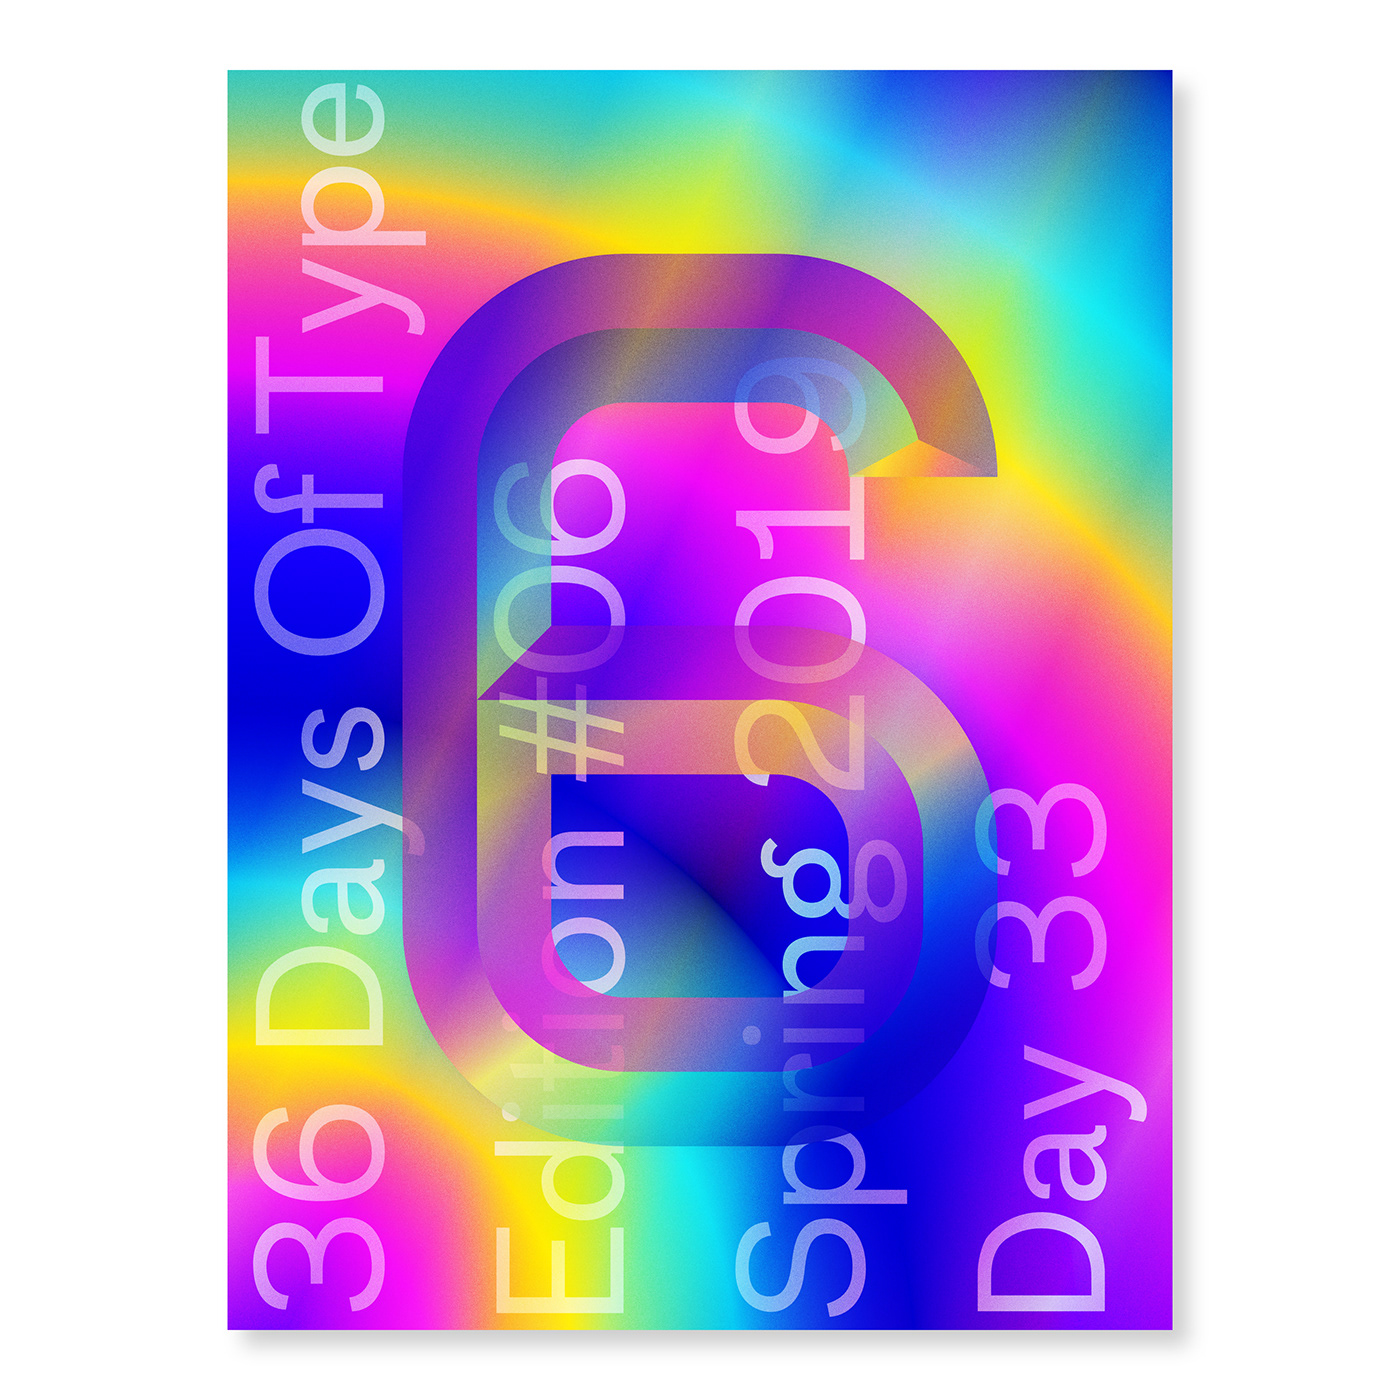 36daysoftype affinity designer 3D gradients iridescent lettering challenge poster